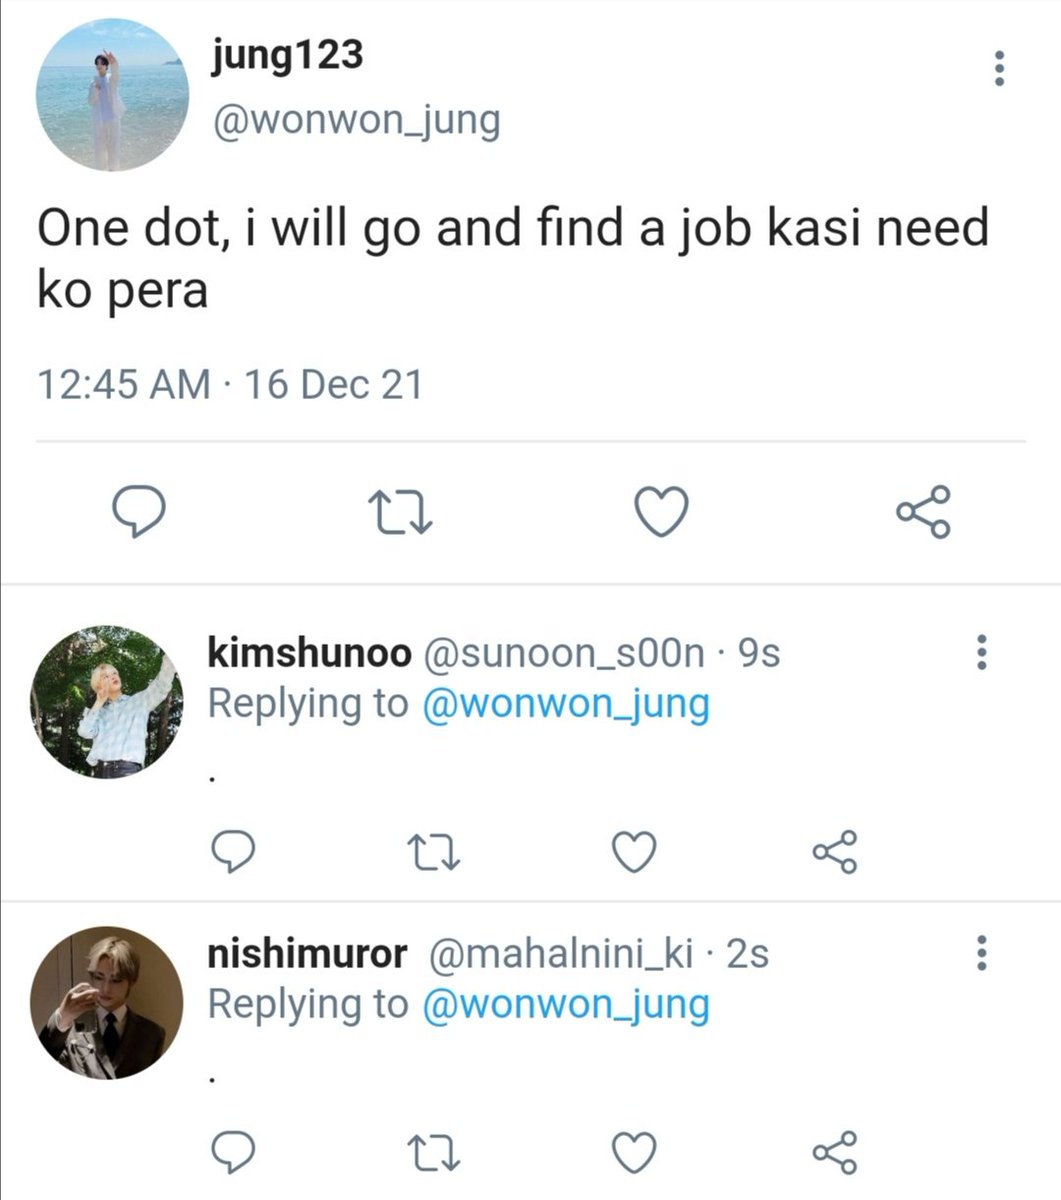 1. Job finding